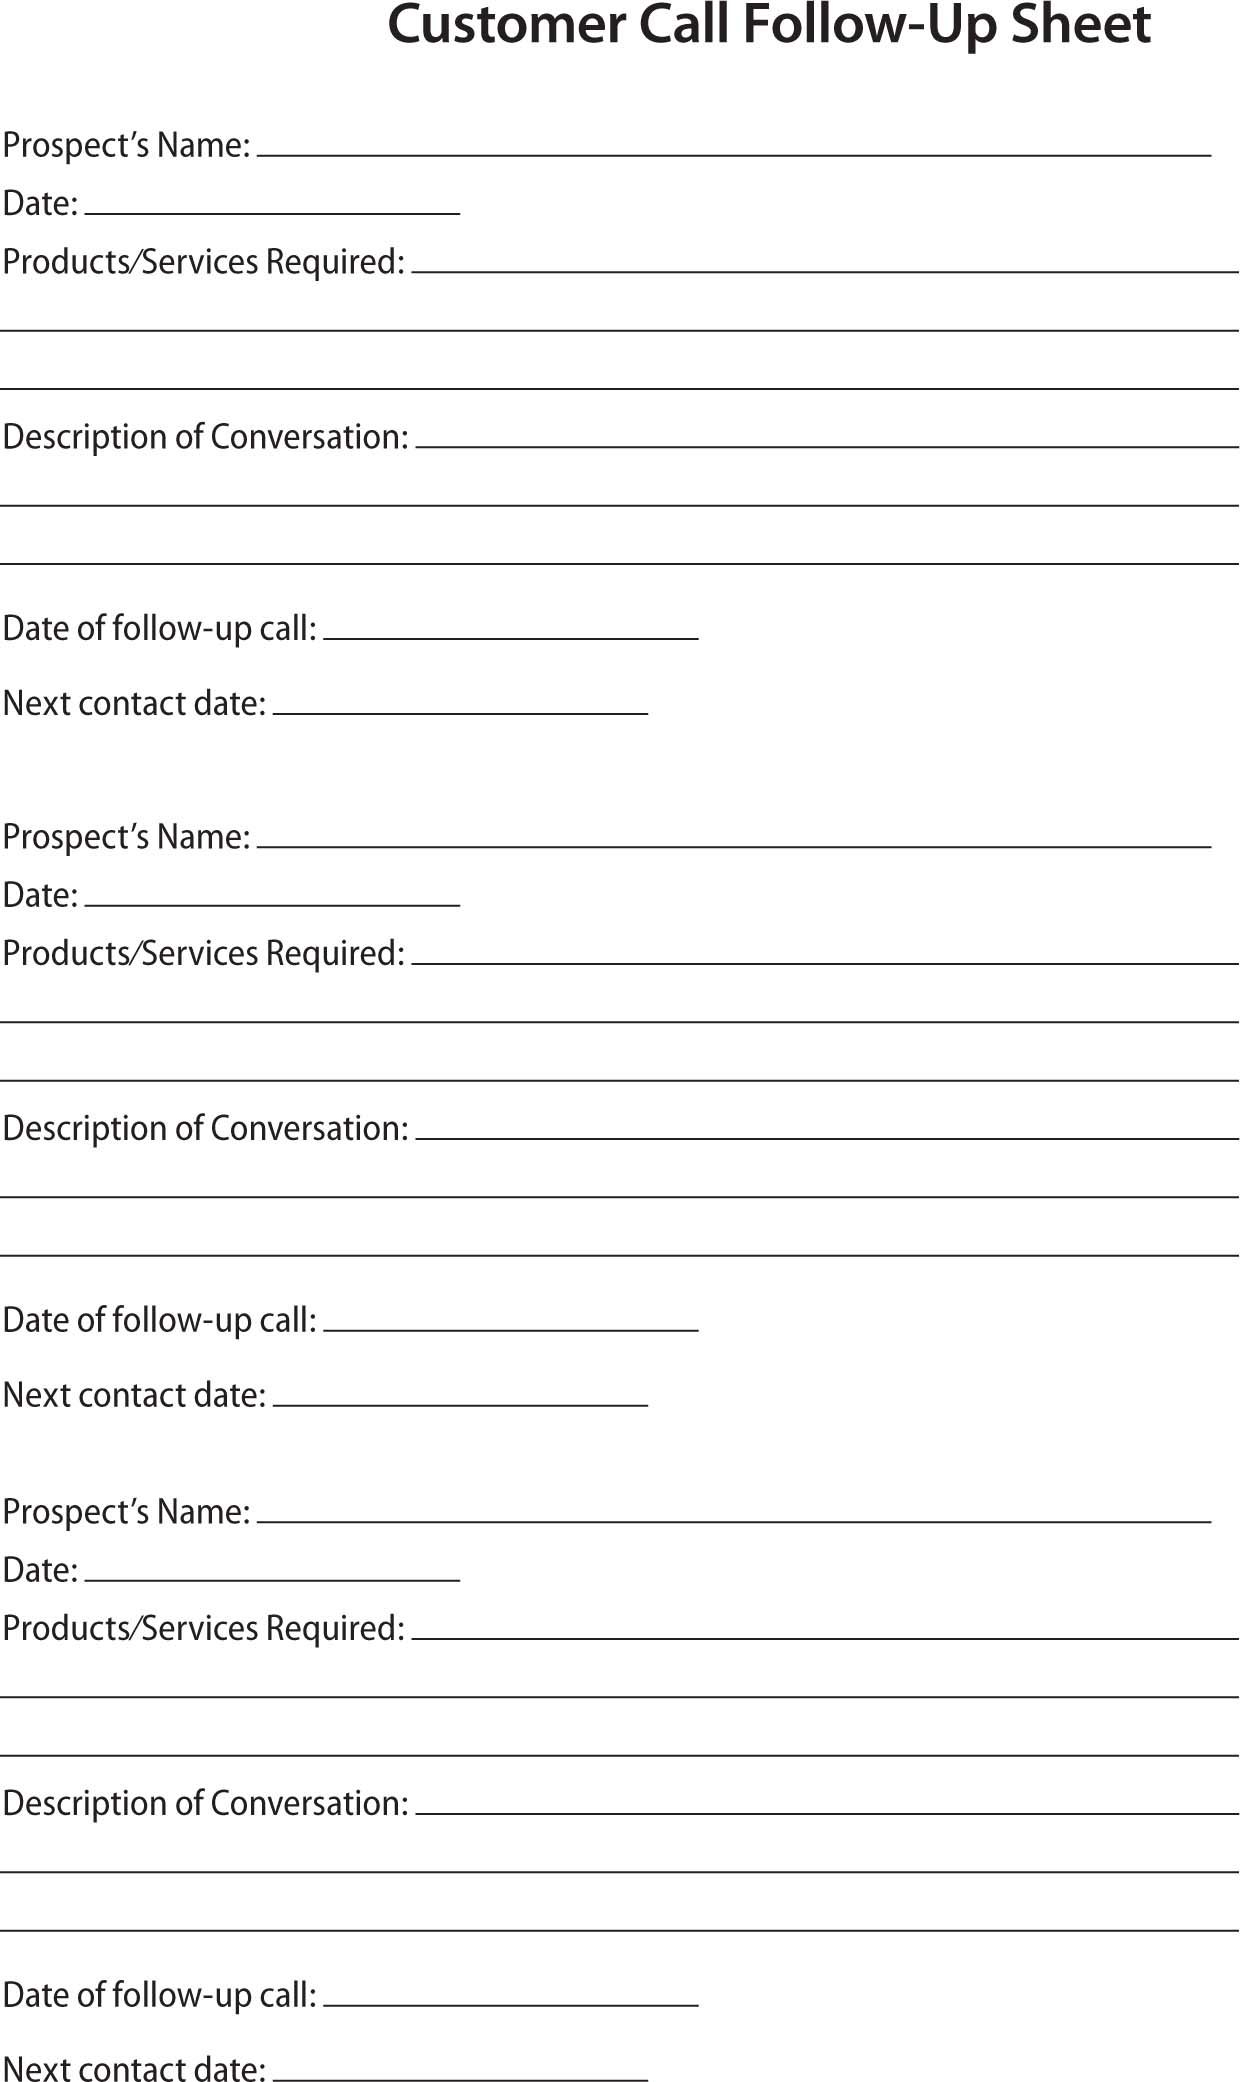 80 20 Prospect Sheet Customer Call Follow Up | Call Sheet Throughout Customer Contact Report Template